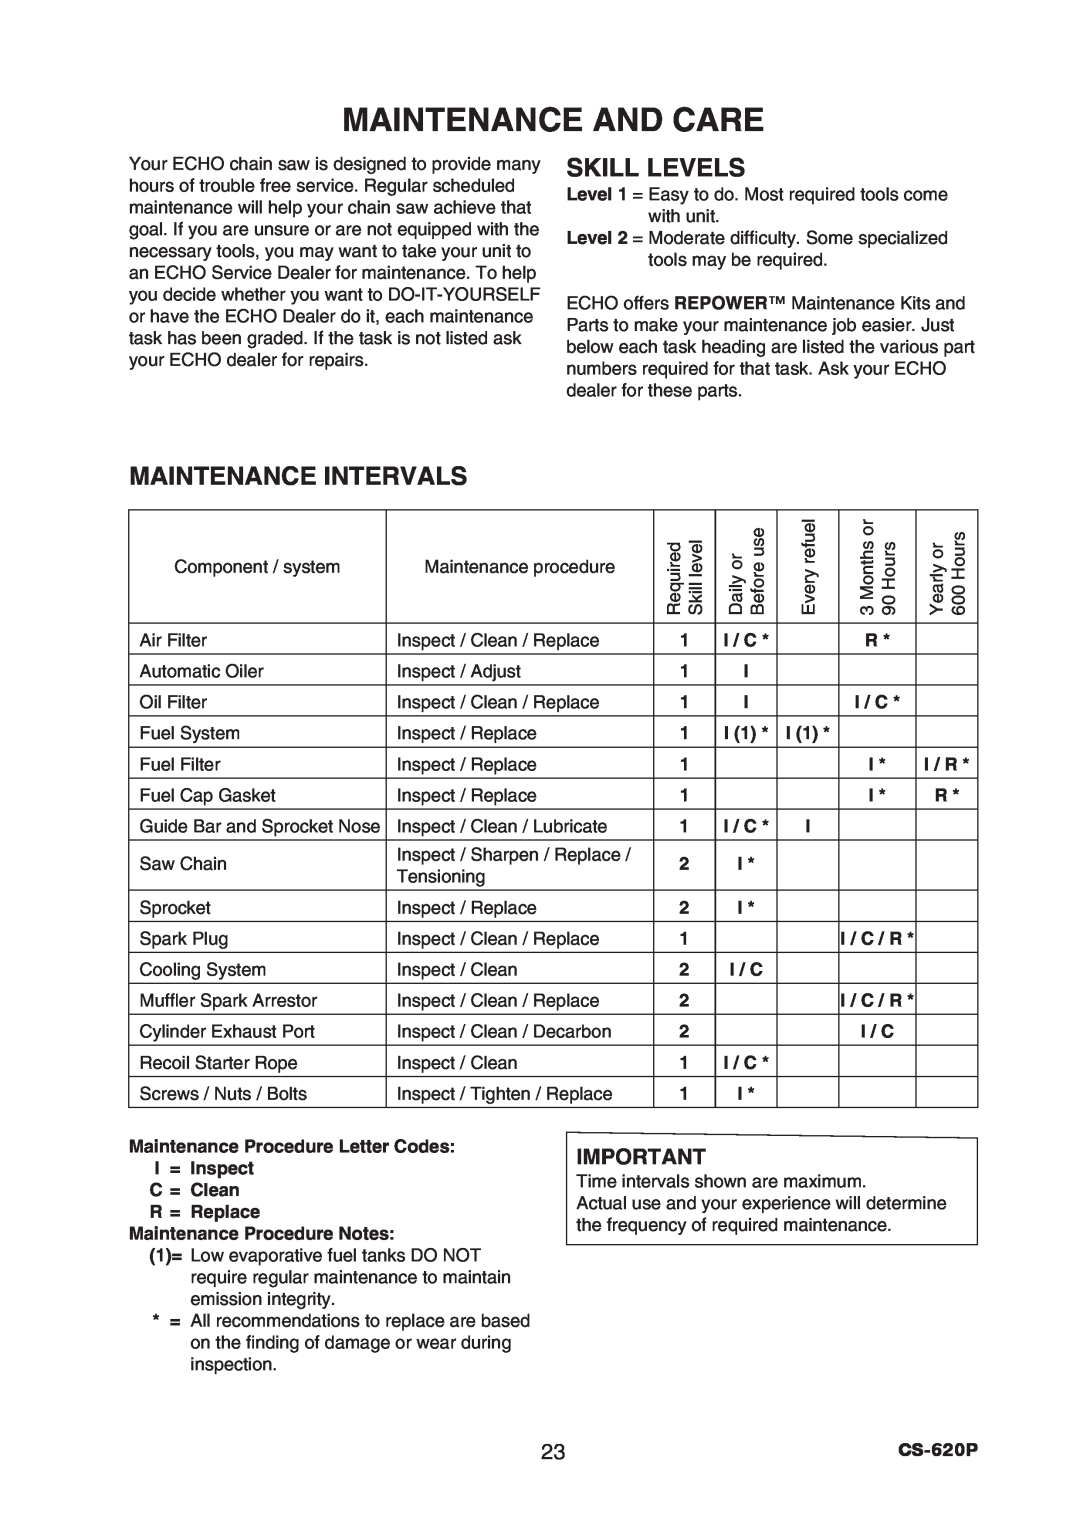 Echo CS-620P instruction manual Maintenance And Care, Skill Levels, Maintenance Intervals 